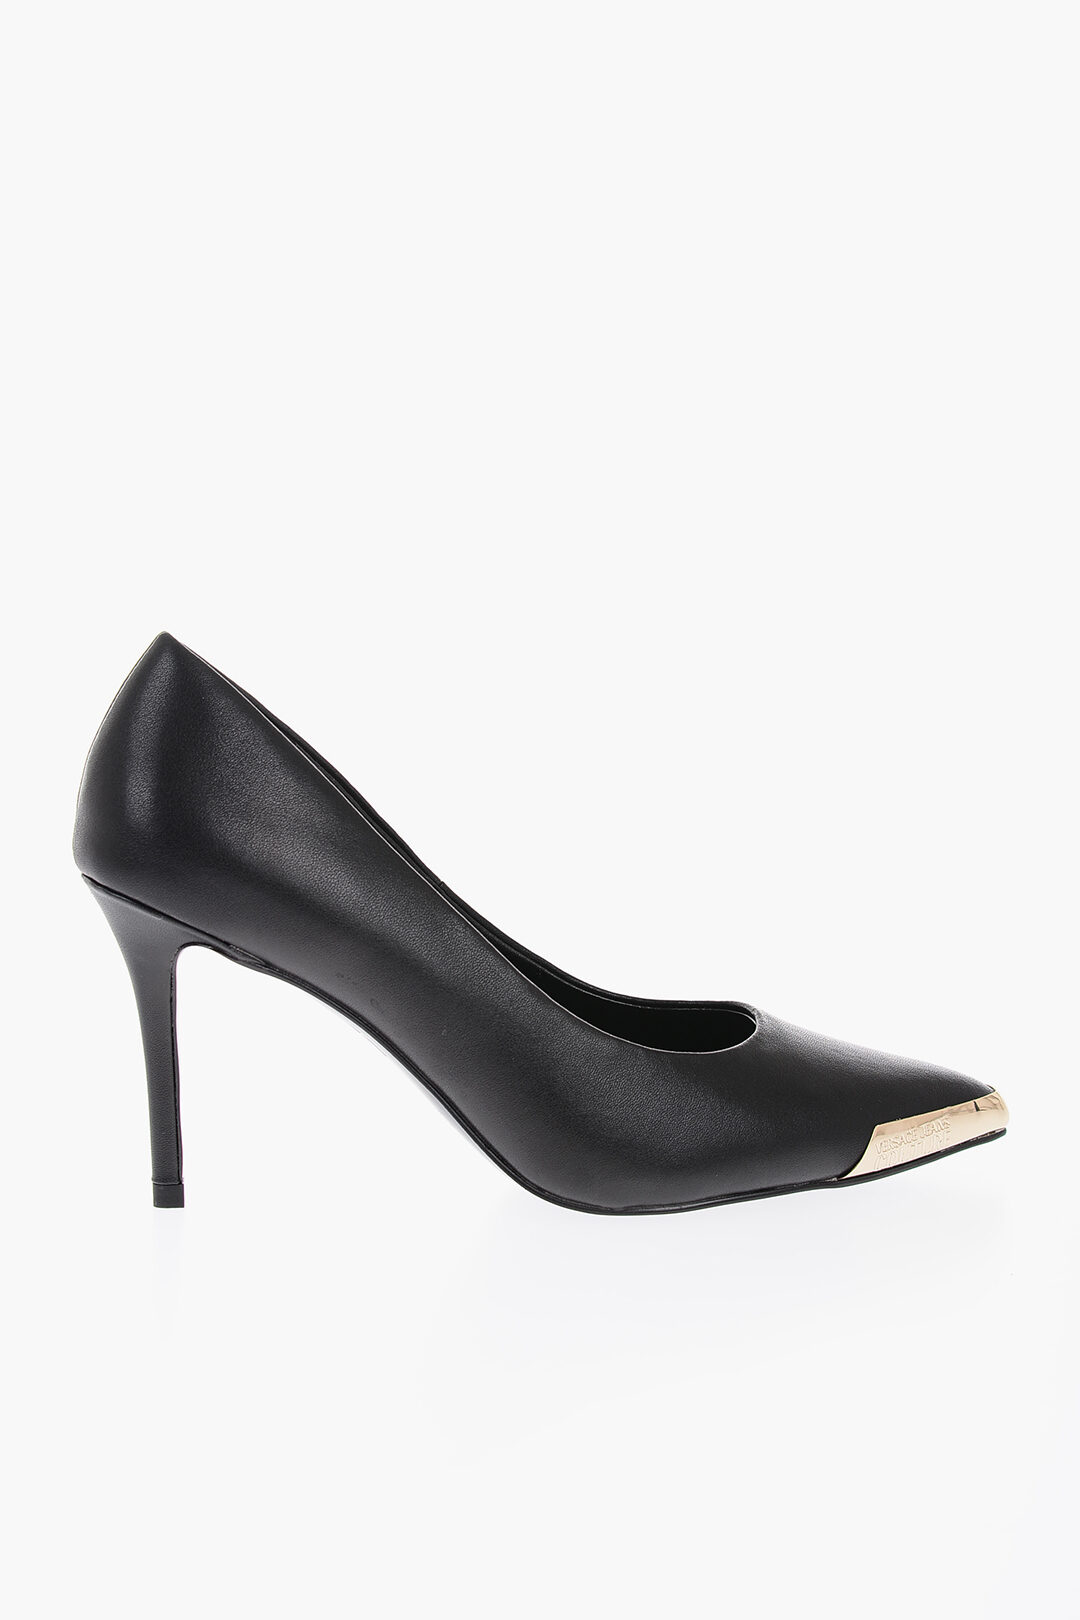 Versace Women's Medusa Gray Open Toe High Heels Pumps Shoes US 10.5 IT 40.5  | eBay